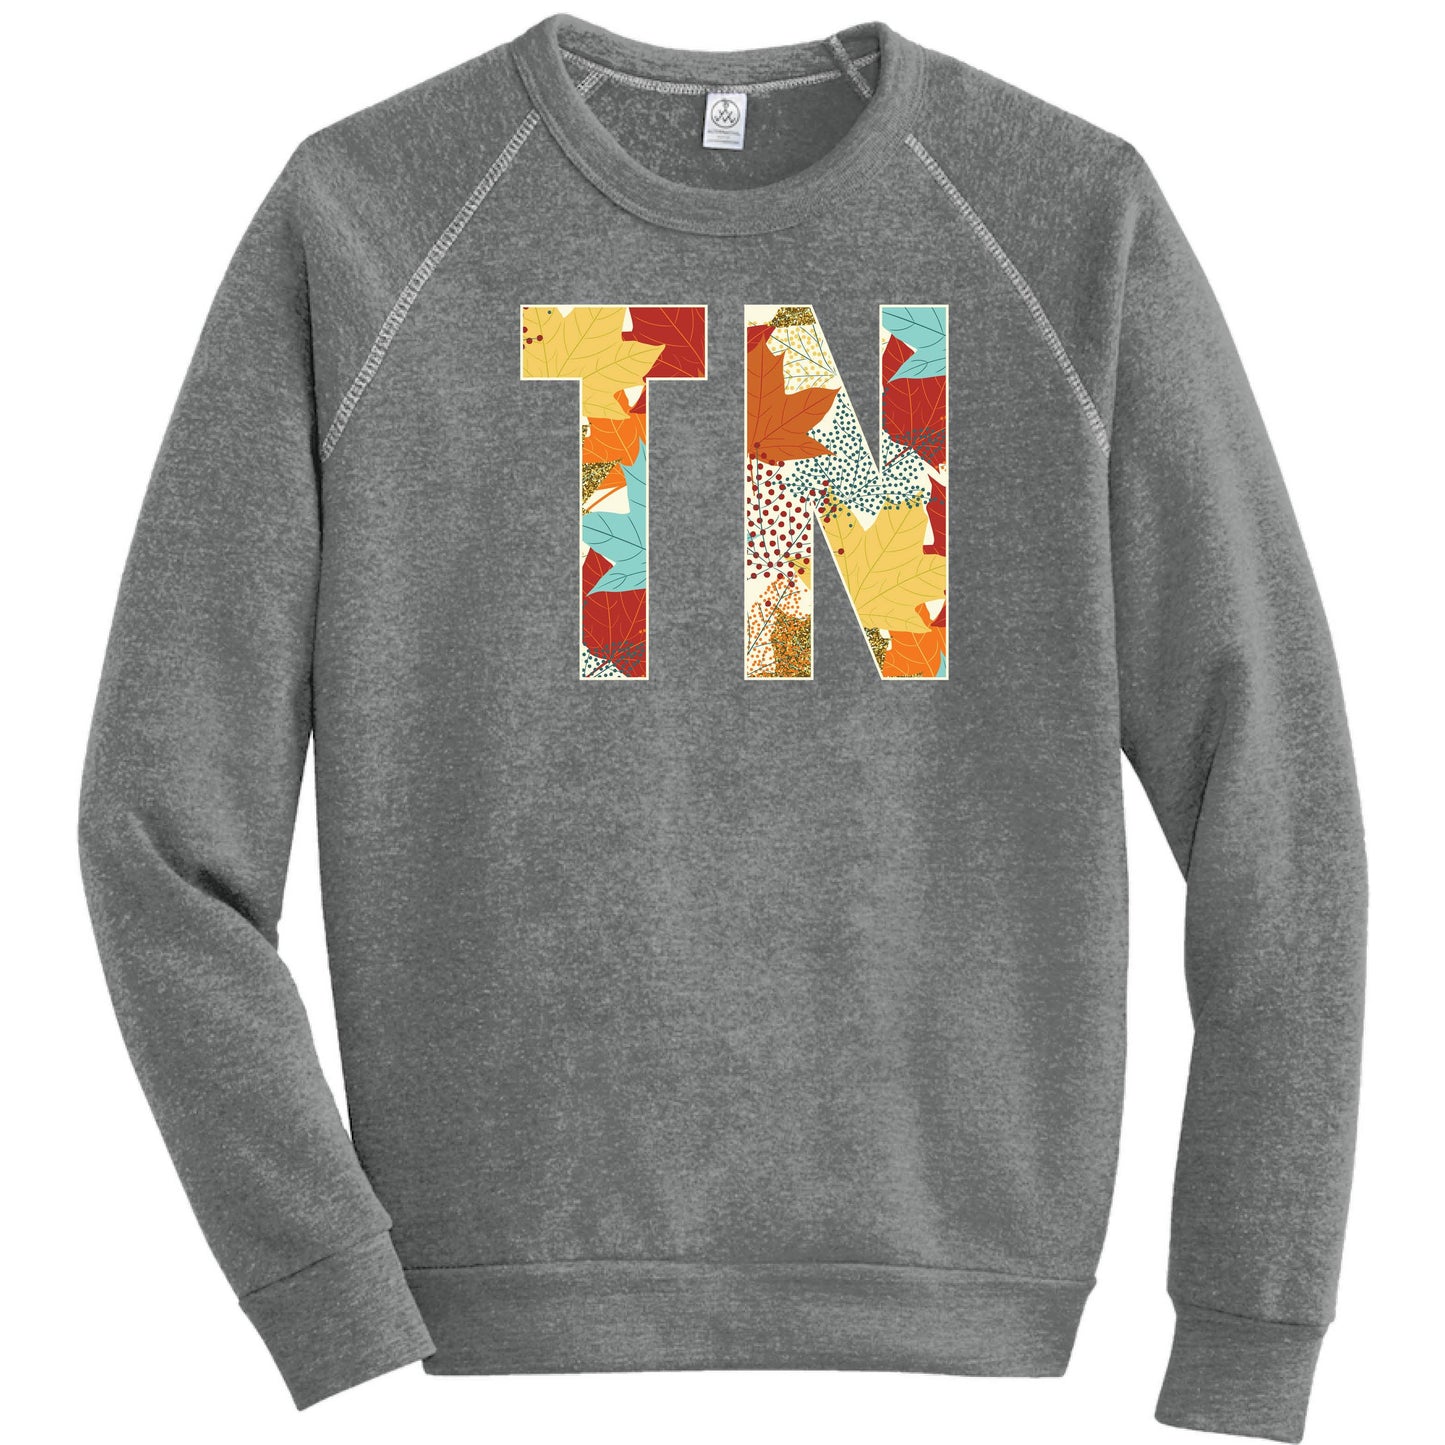 Tennessee Fall Foliage - Fleece Sweatshirt